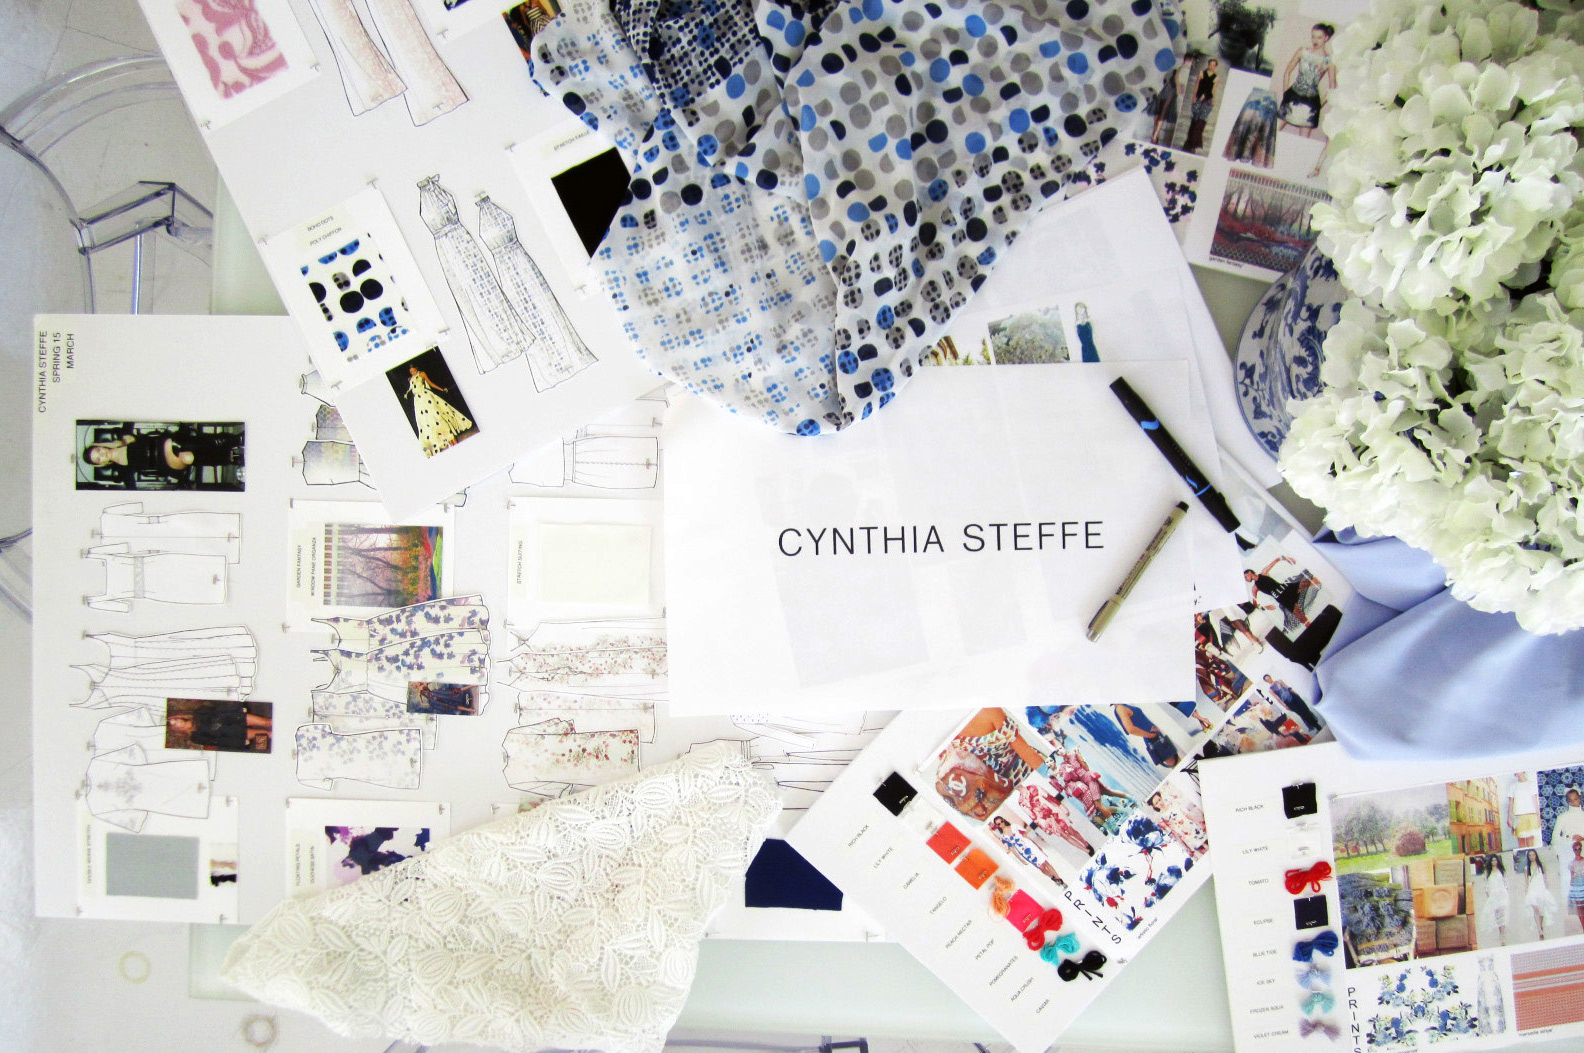 CYNTHIA STEFFE's Workspace